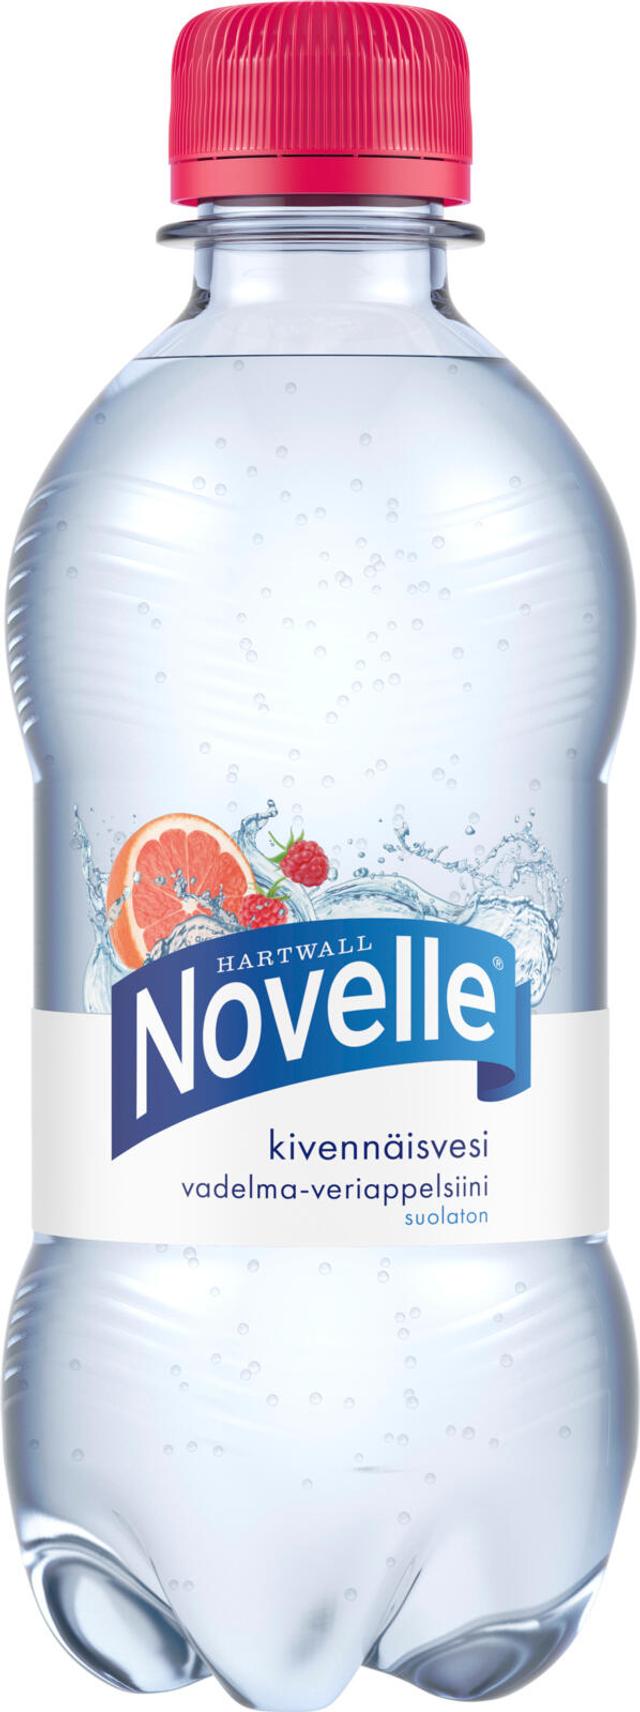 Hartwall Novelle Vadelma-veriappelsiini kivennäisvesi 0,33 l